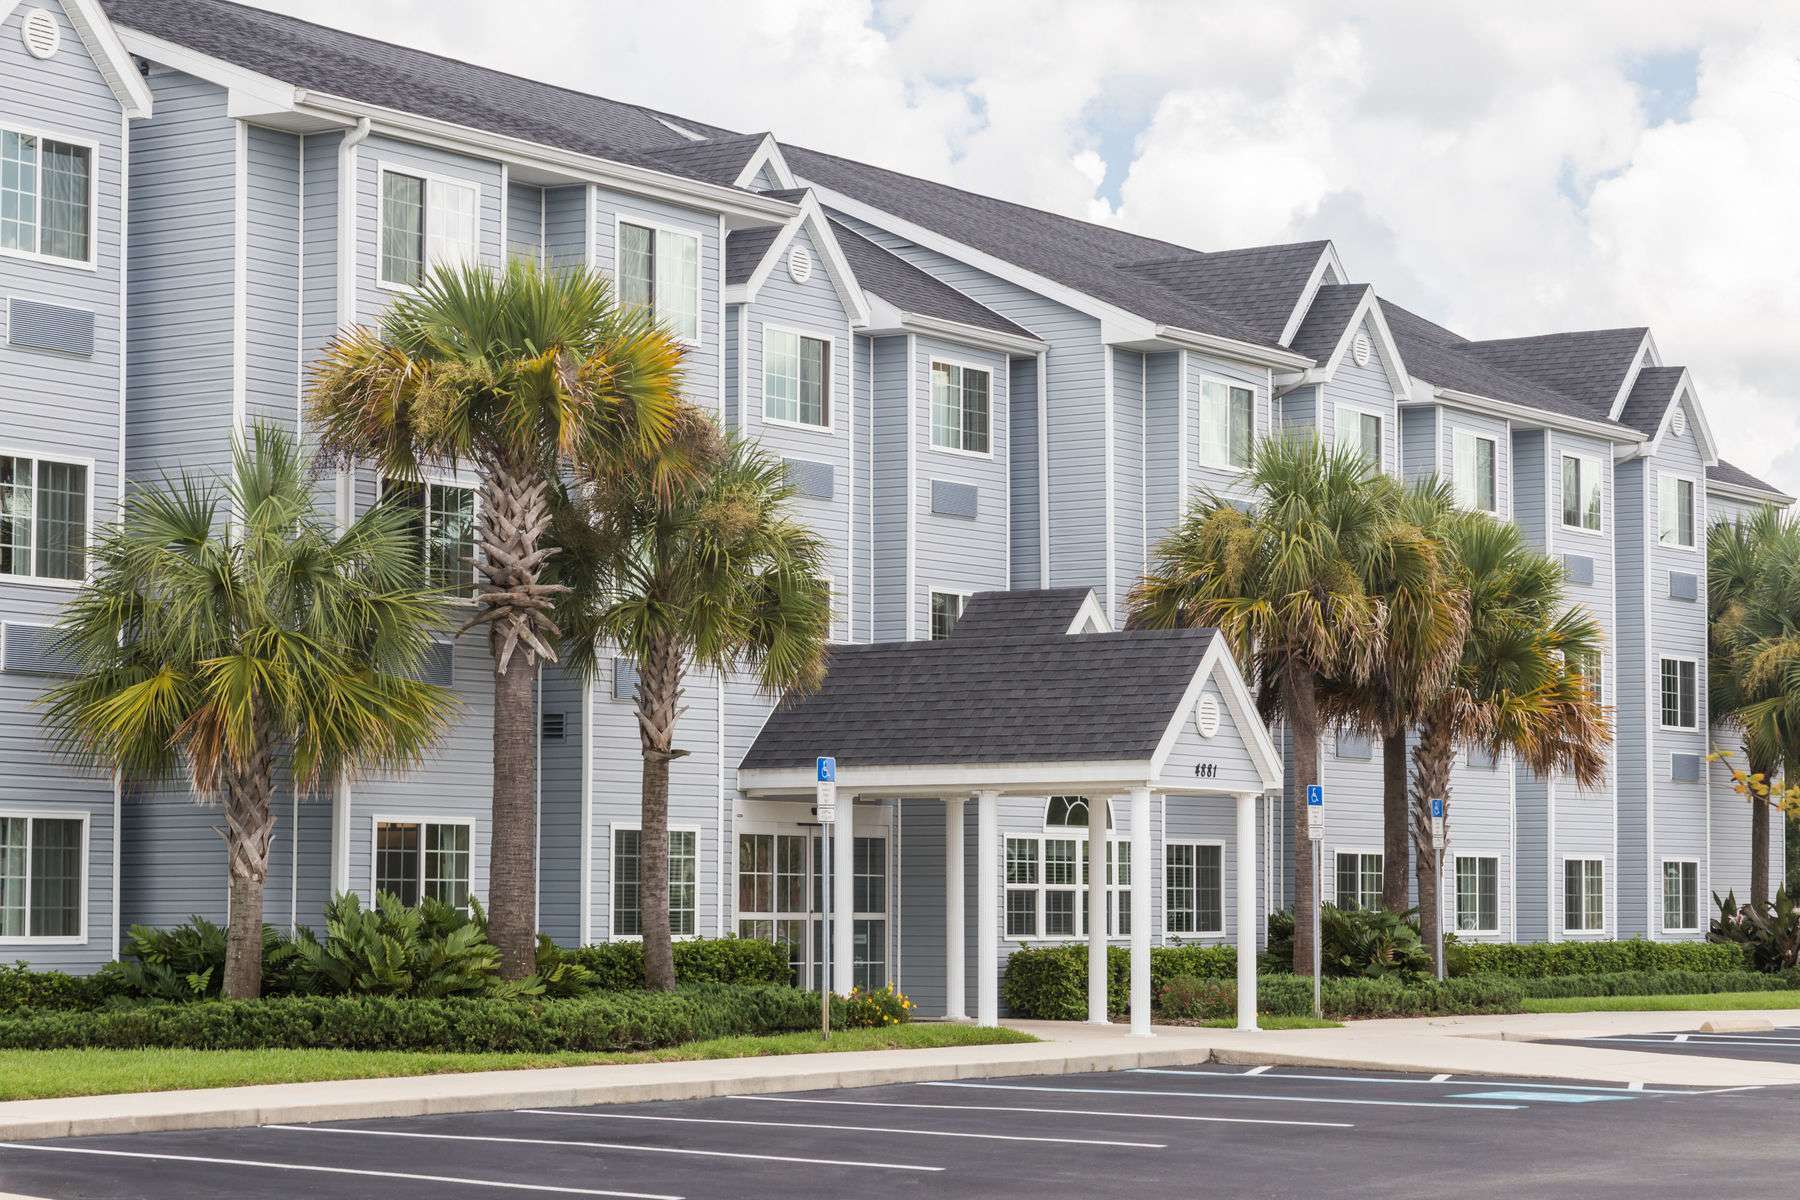 Photo of Microtel Inn & Suites by Wyndham Weeki Wachee, Spring Hill, FL